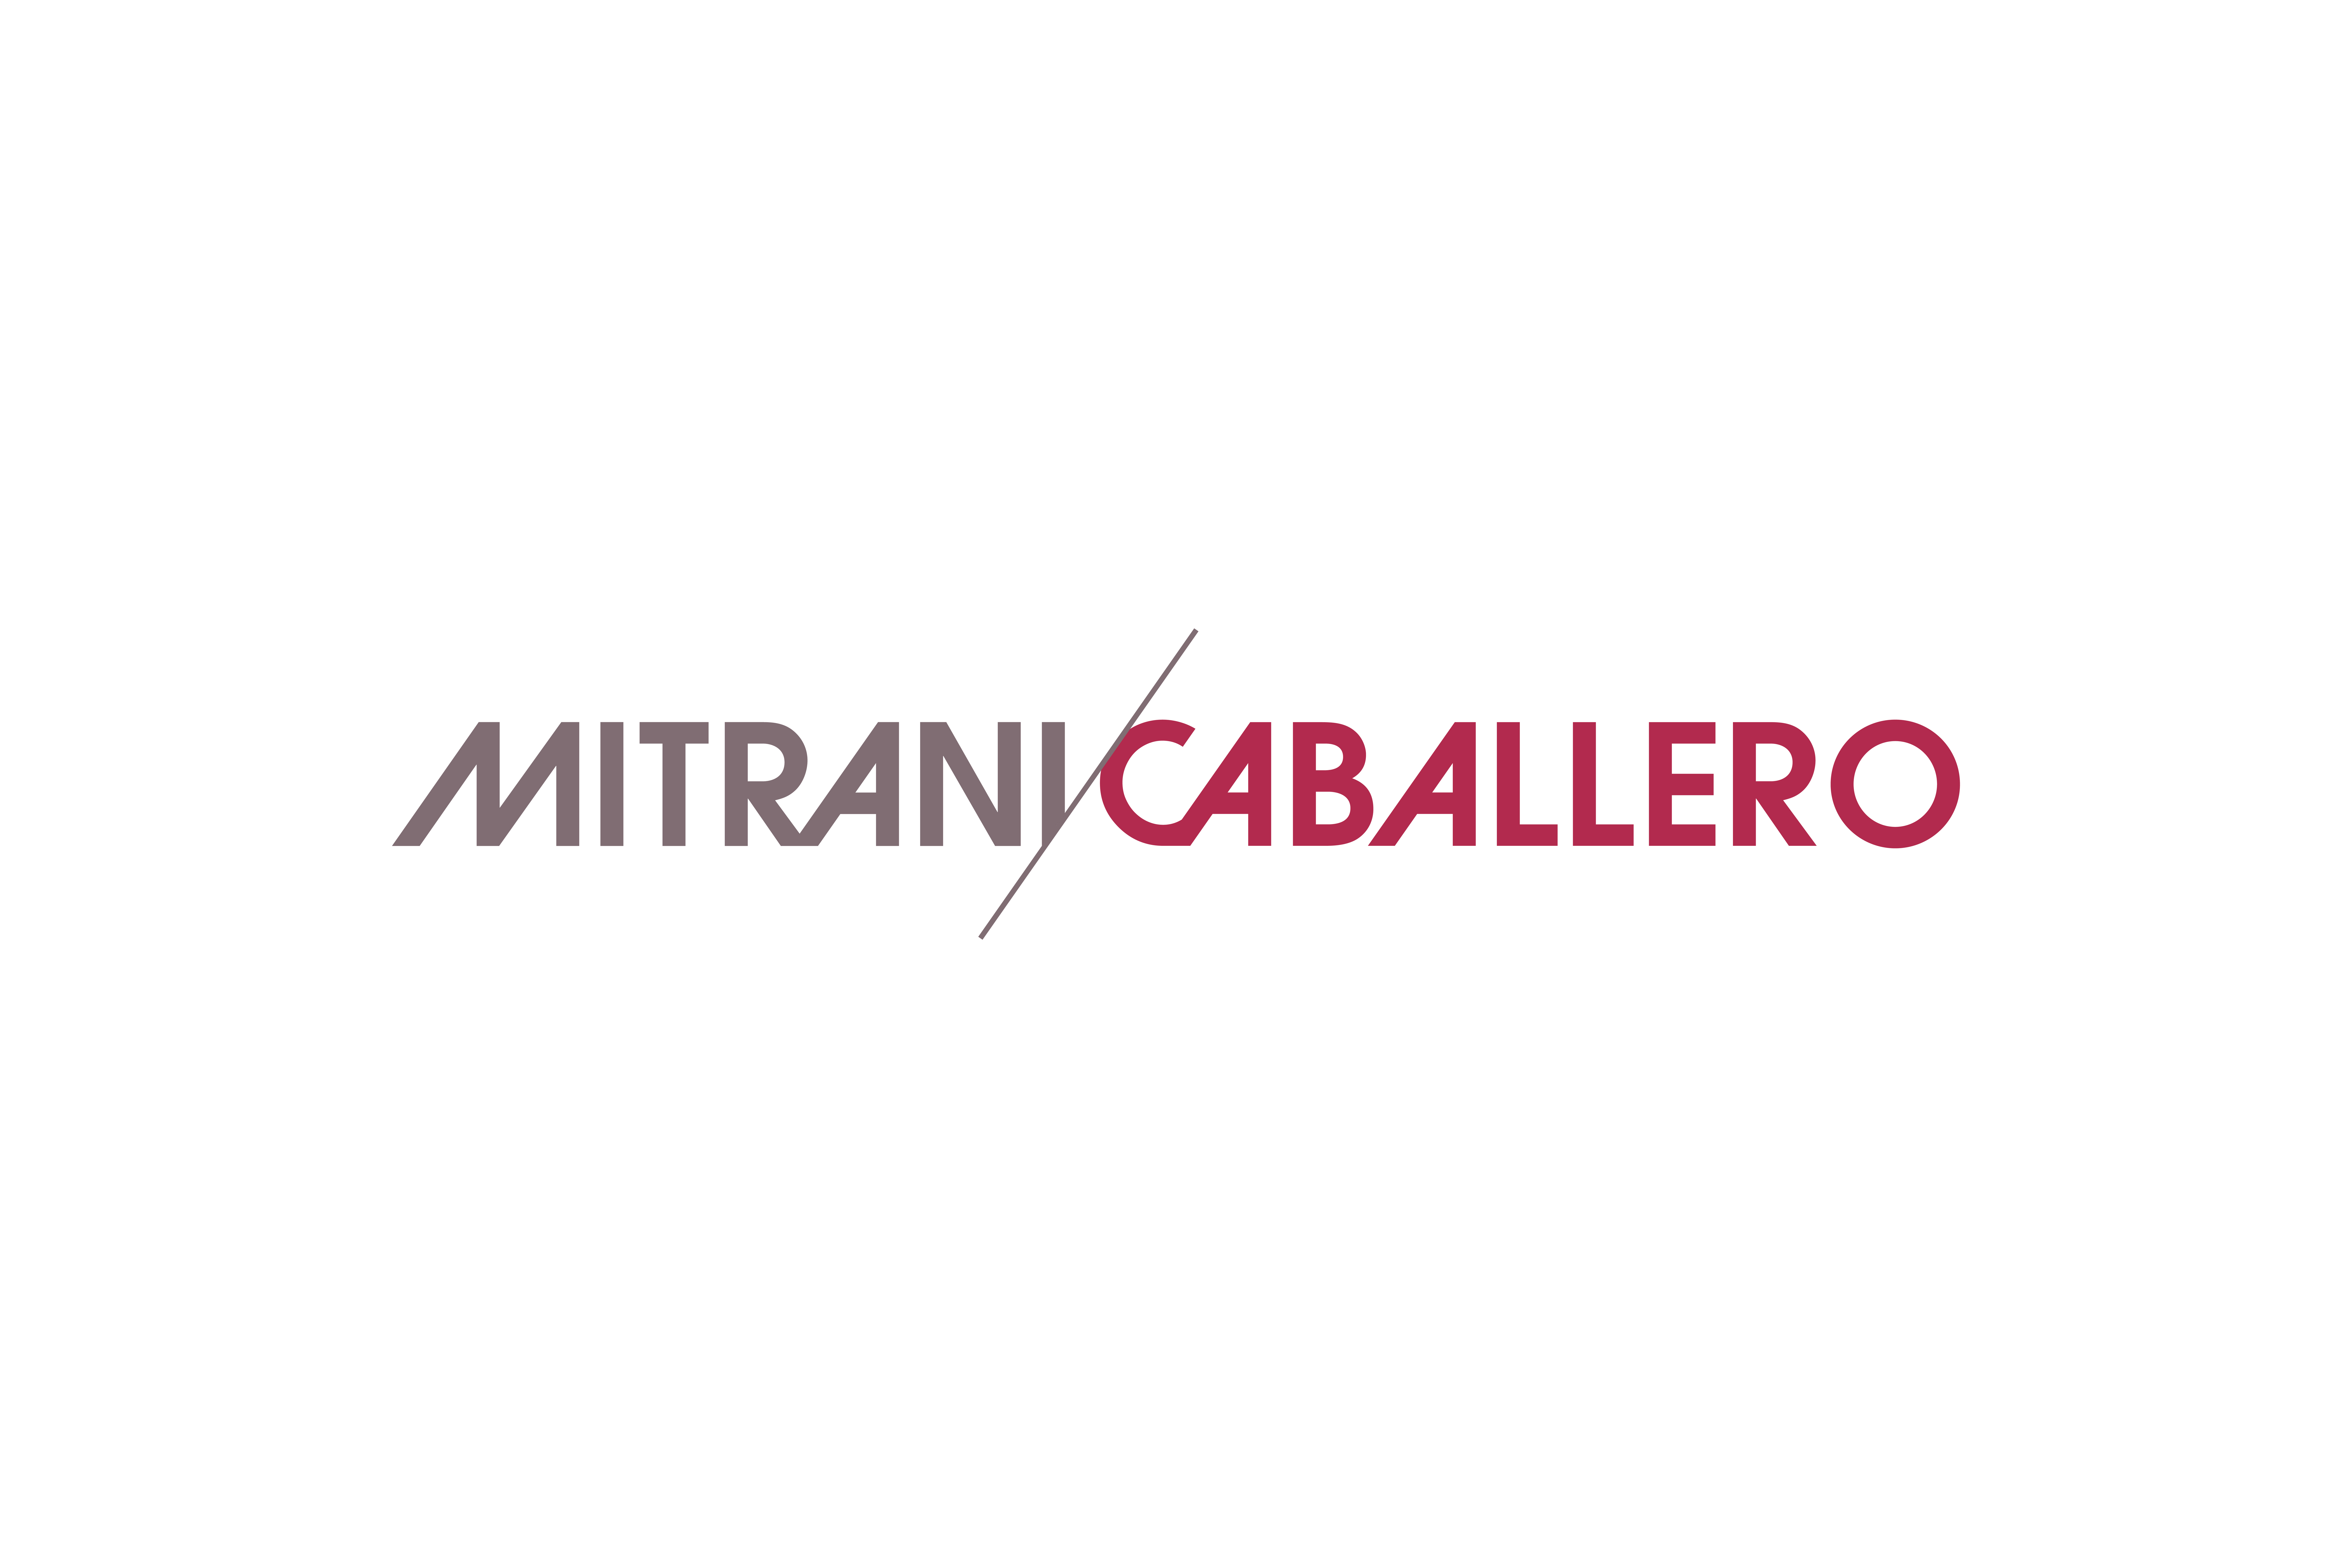 Mitrani Caballero & Ruiz Moreno Abogados company logo